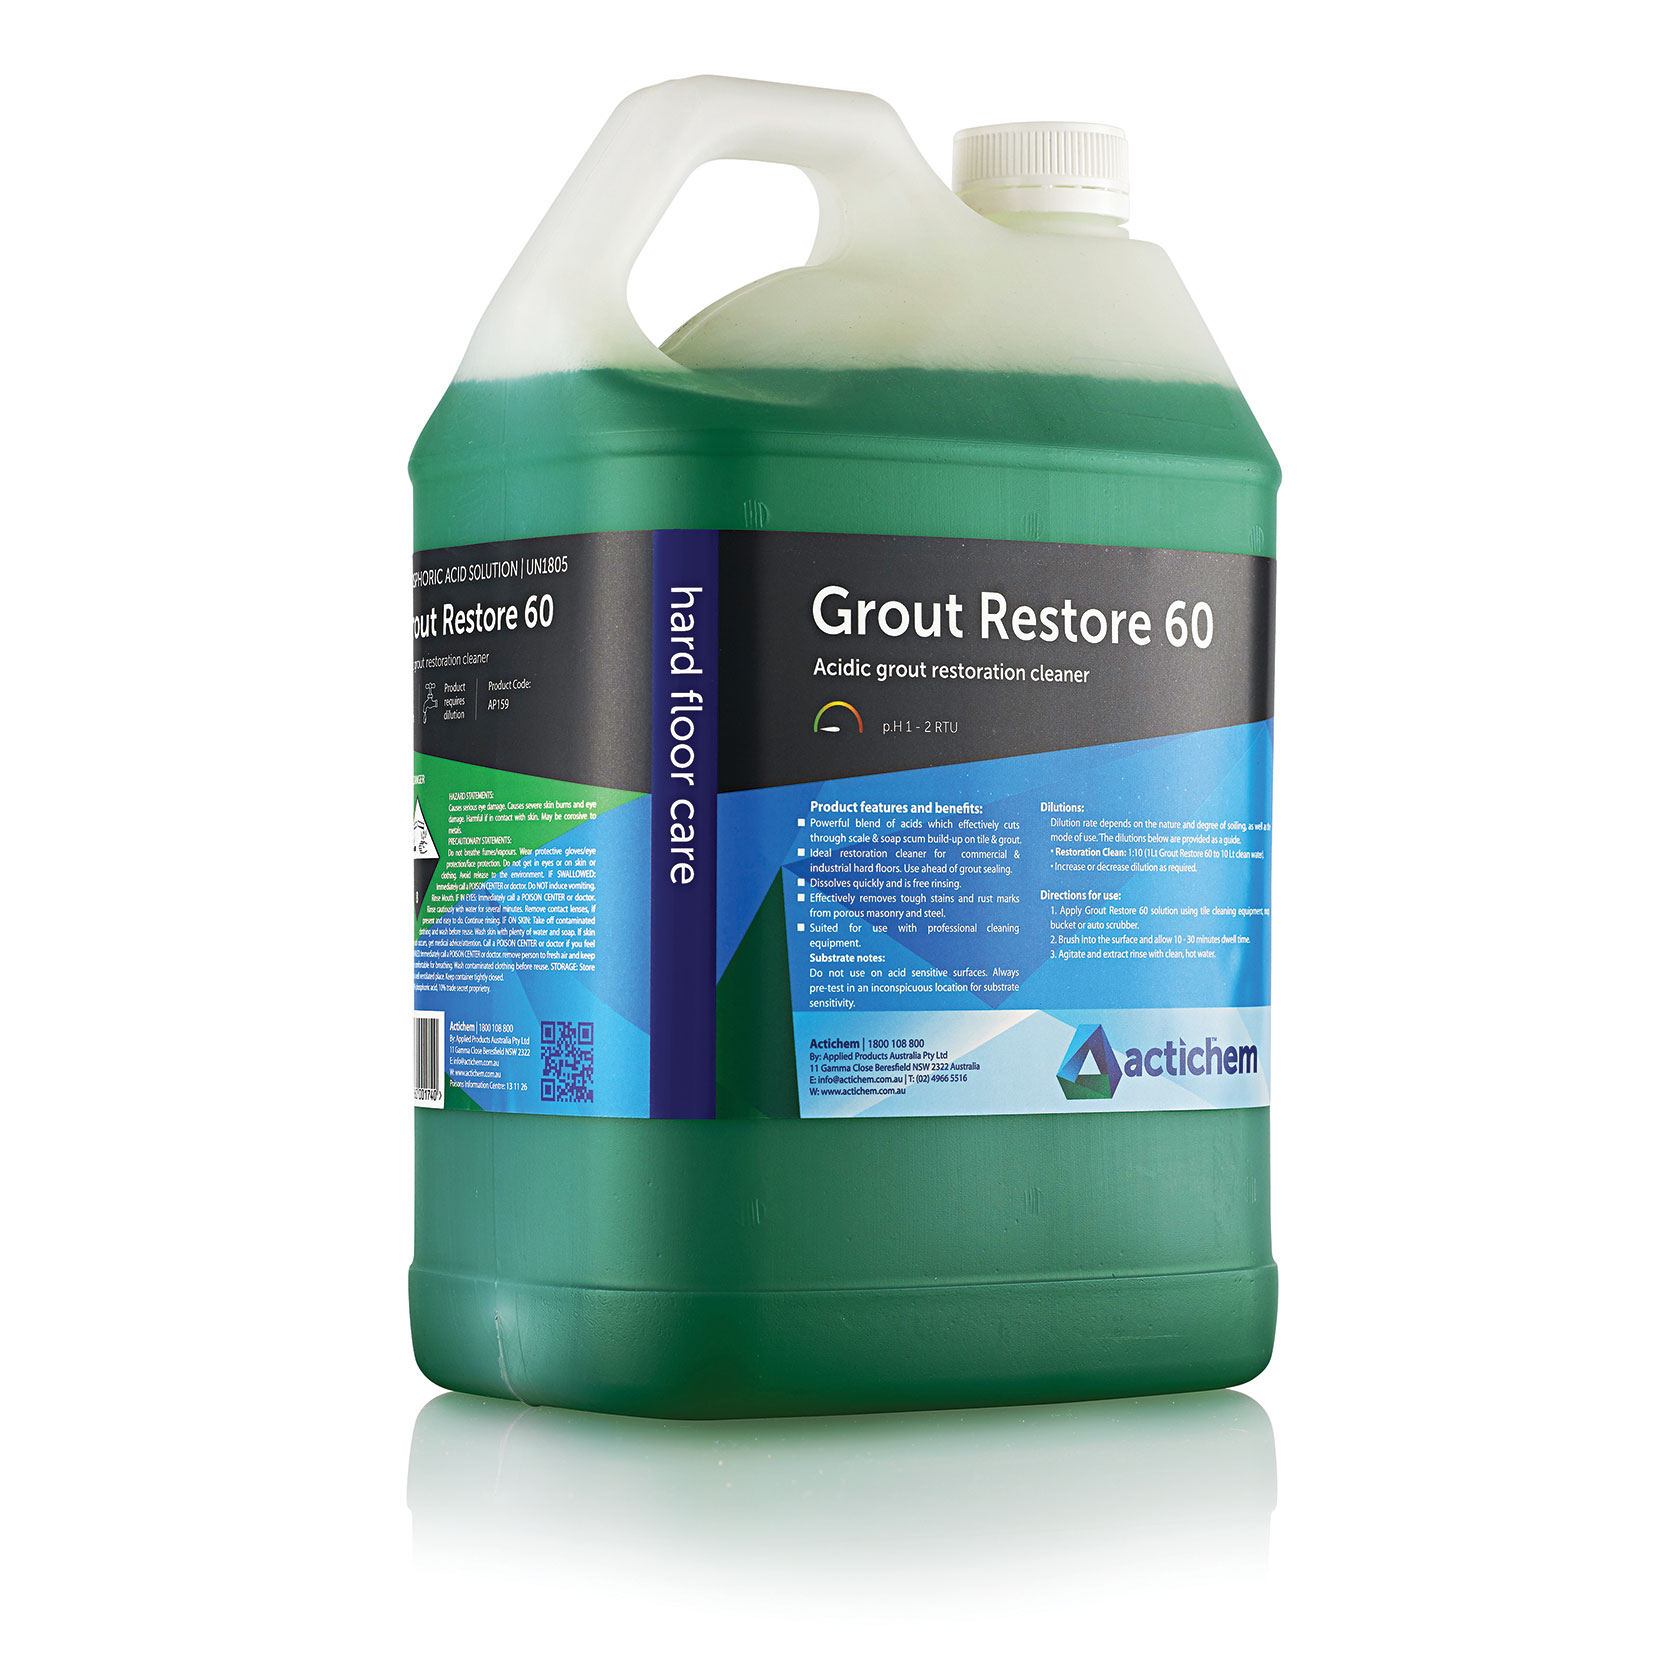 Actichem Grout Restore 60 Phosphoric acid cleaner for hard surfaces